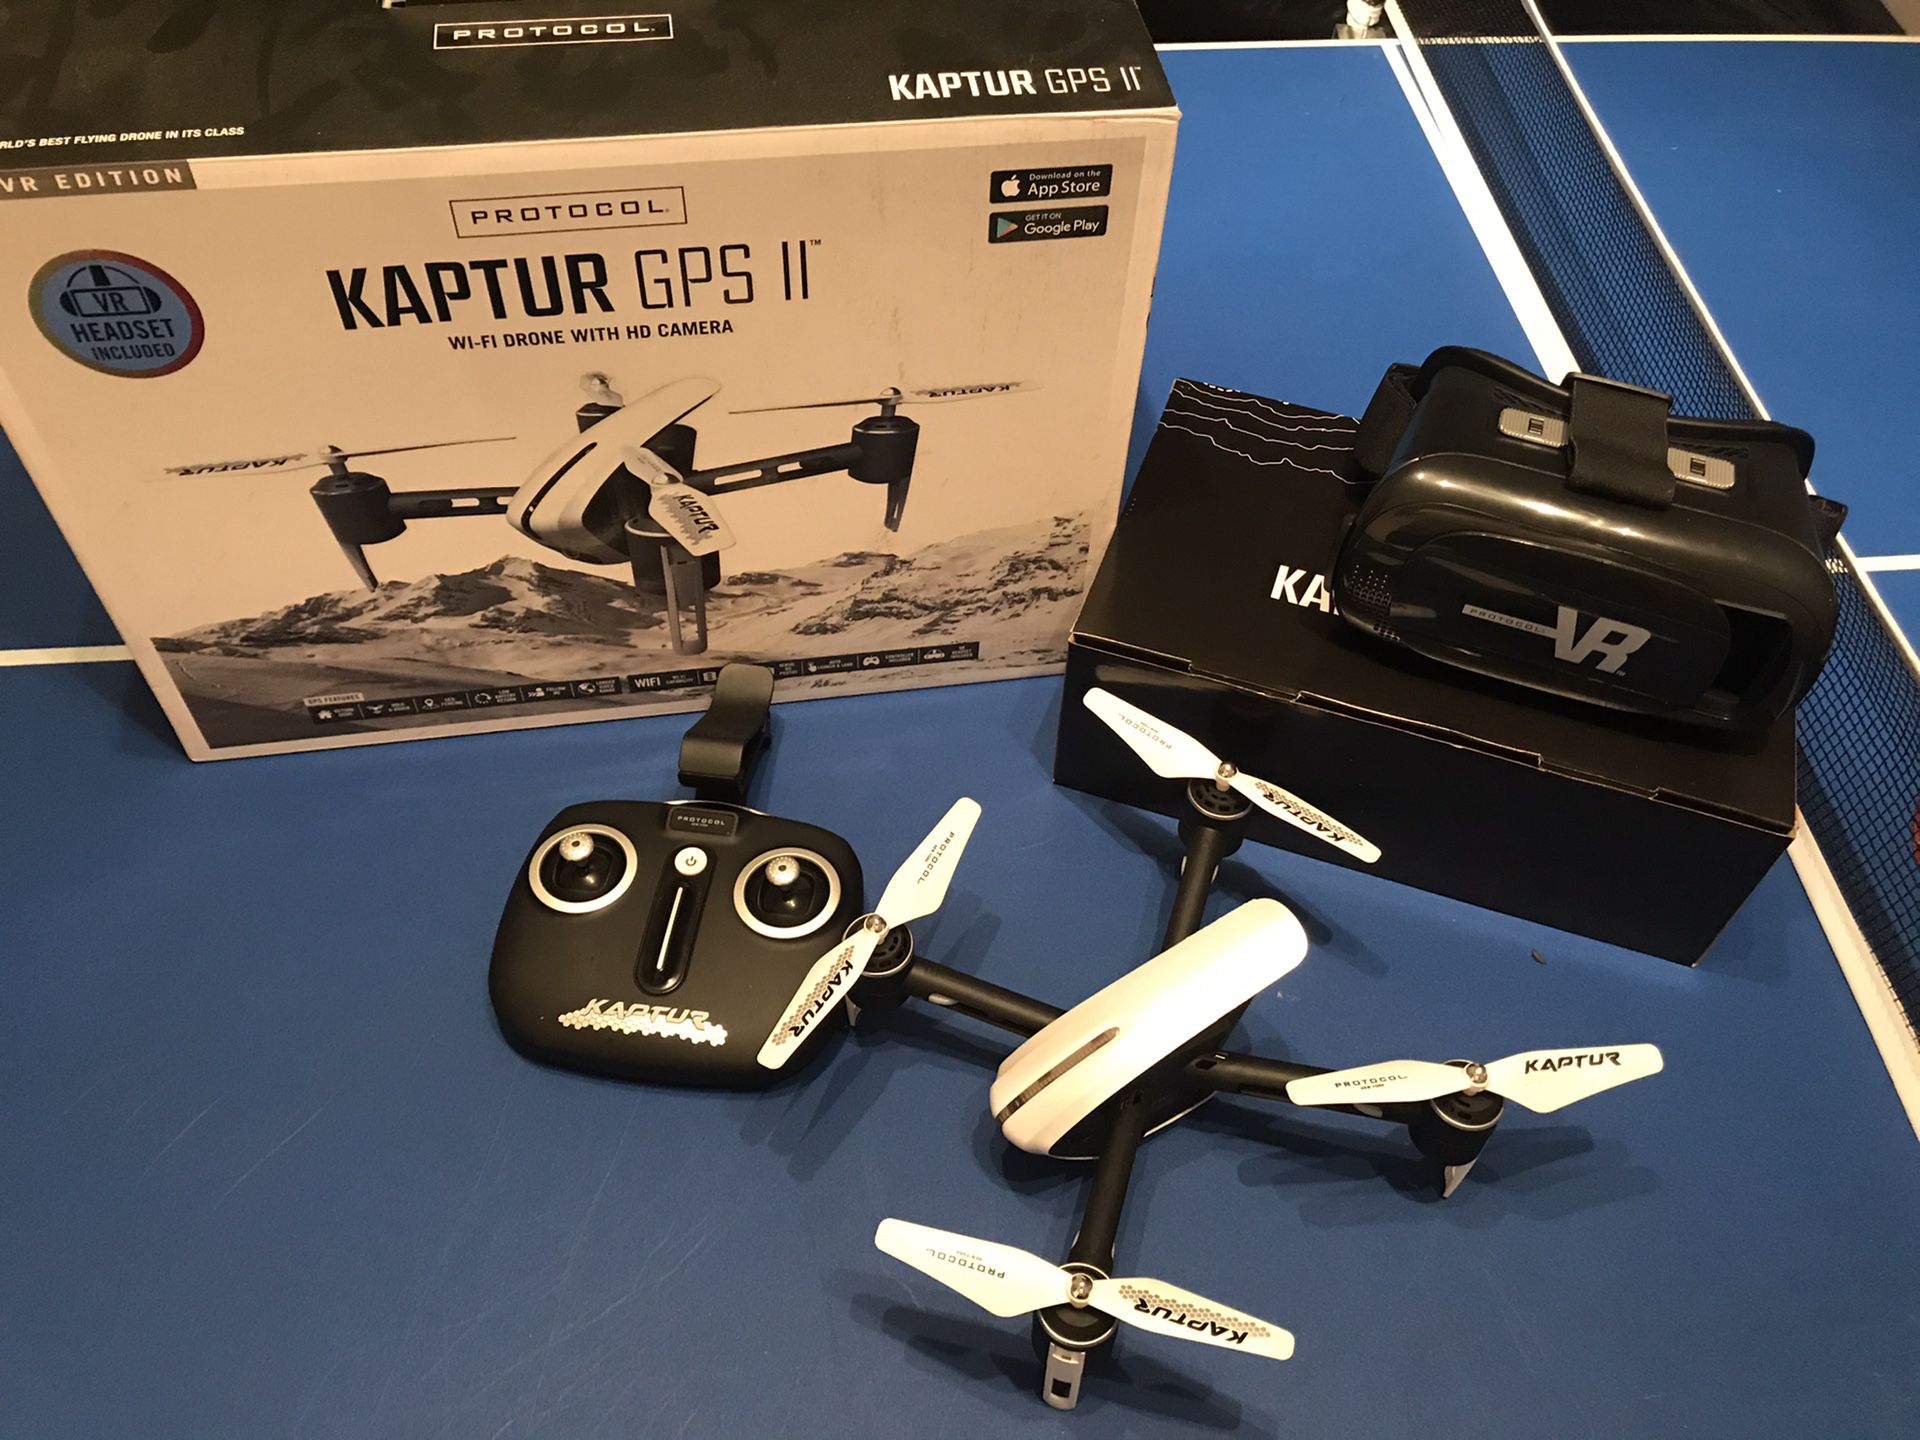 Protocol Kaptur GPS II Wi-Fi Drone with HD Camera VR Edition